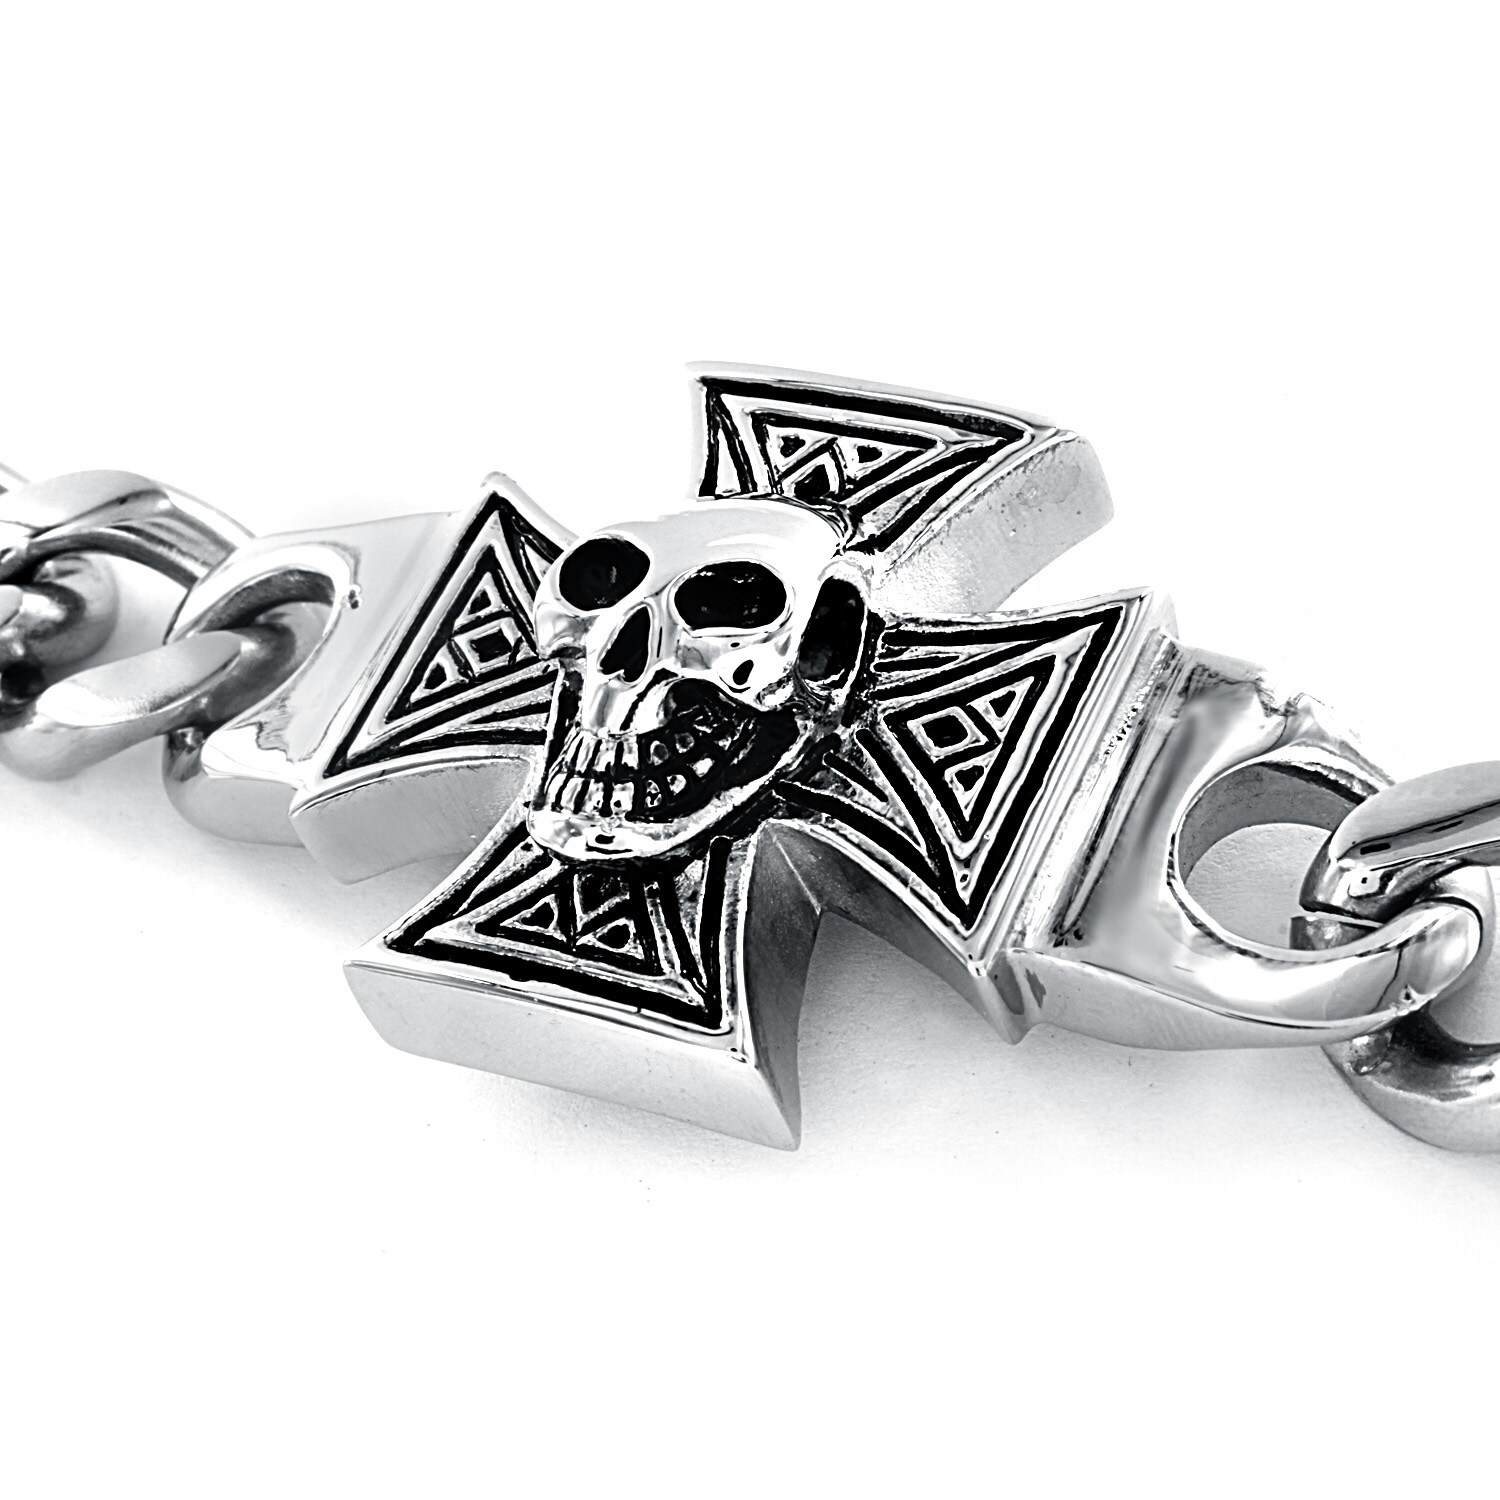 Stainless Steel Iron Cross Men's Cuff Bracelet with Skulls SB35 